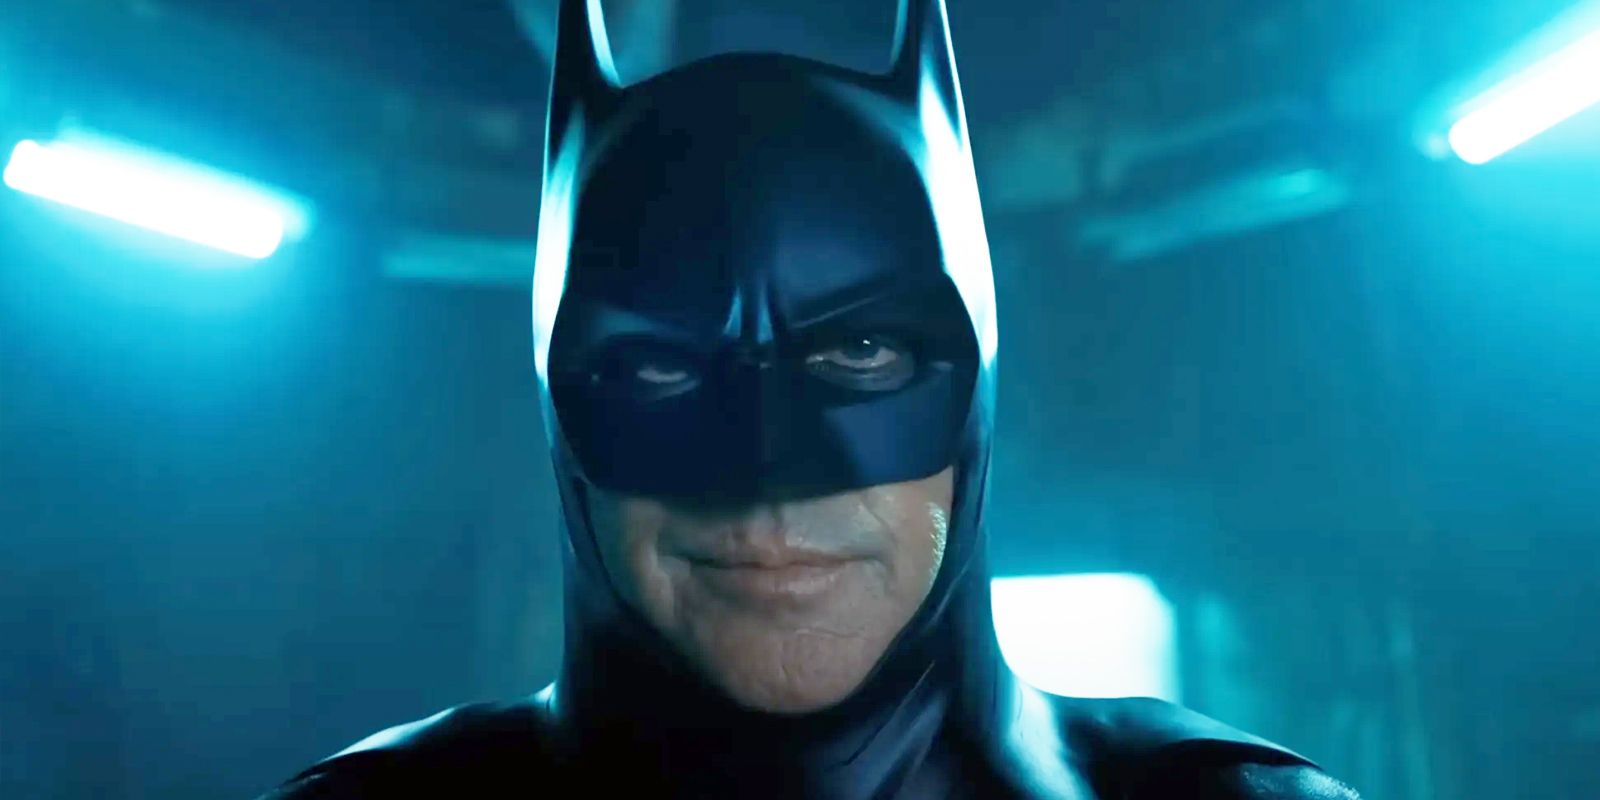 Michael Keaton as Batman in The Flash.